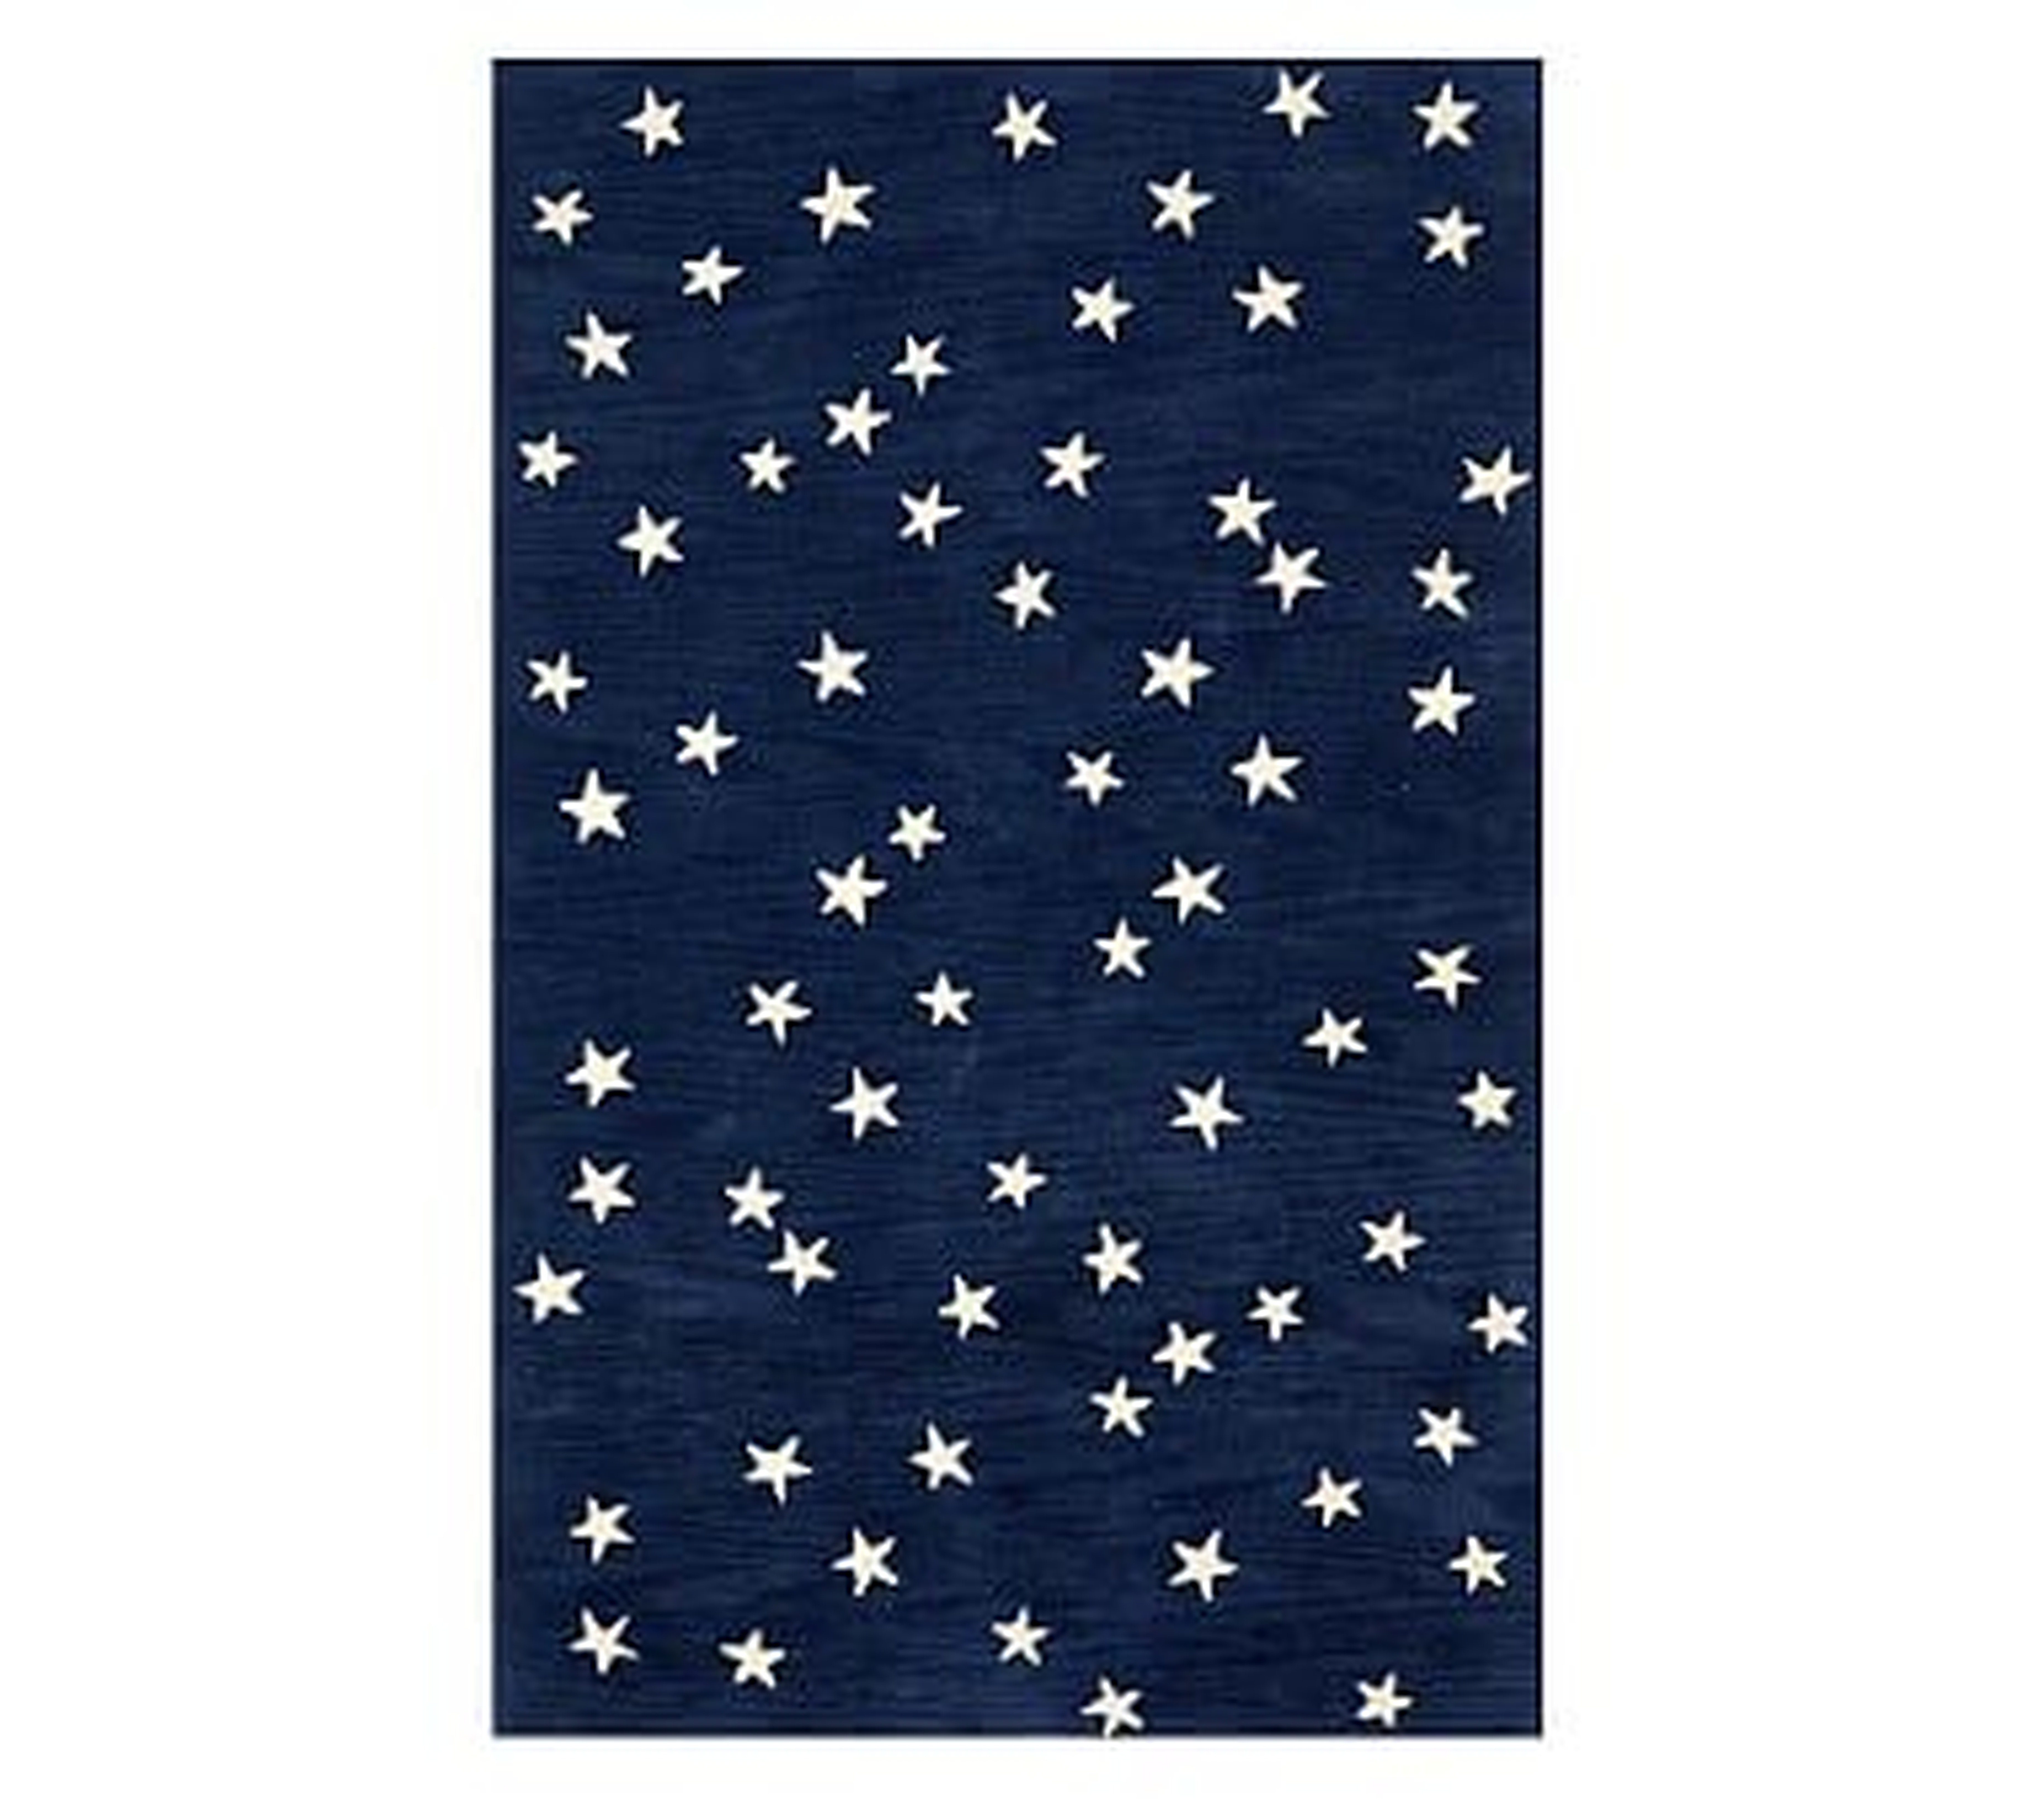 Starry Skies Rug, 5x8', Navy - Pottery Barn Kids